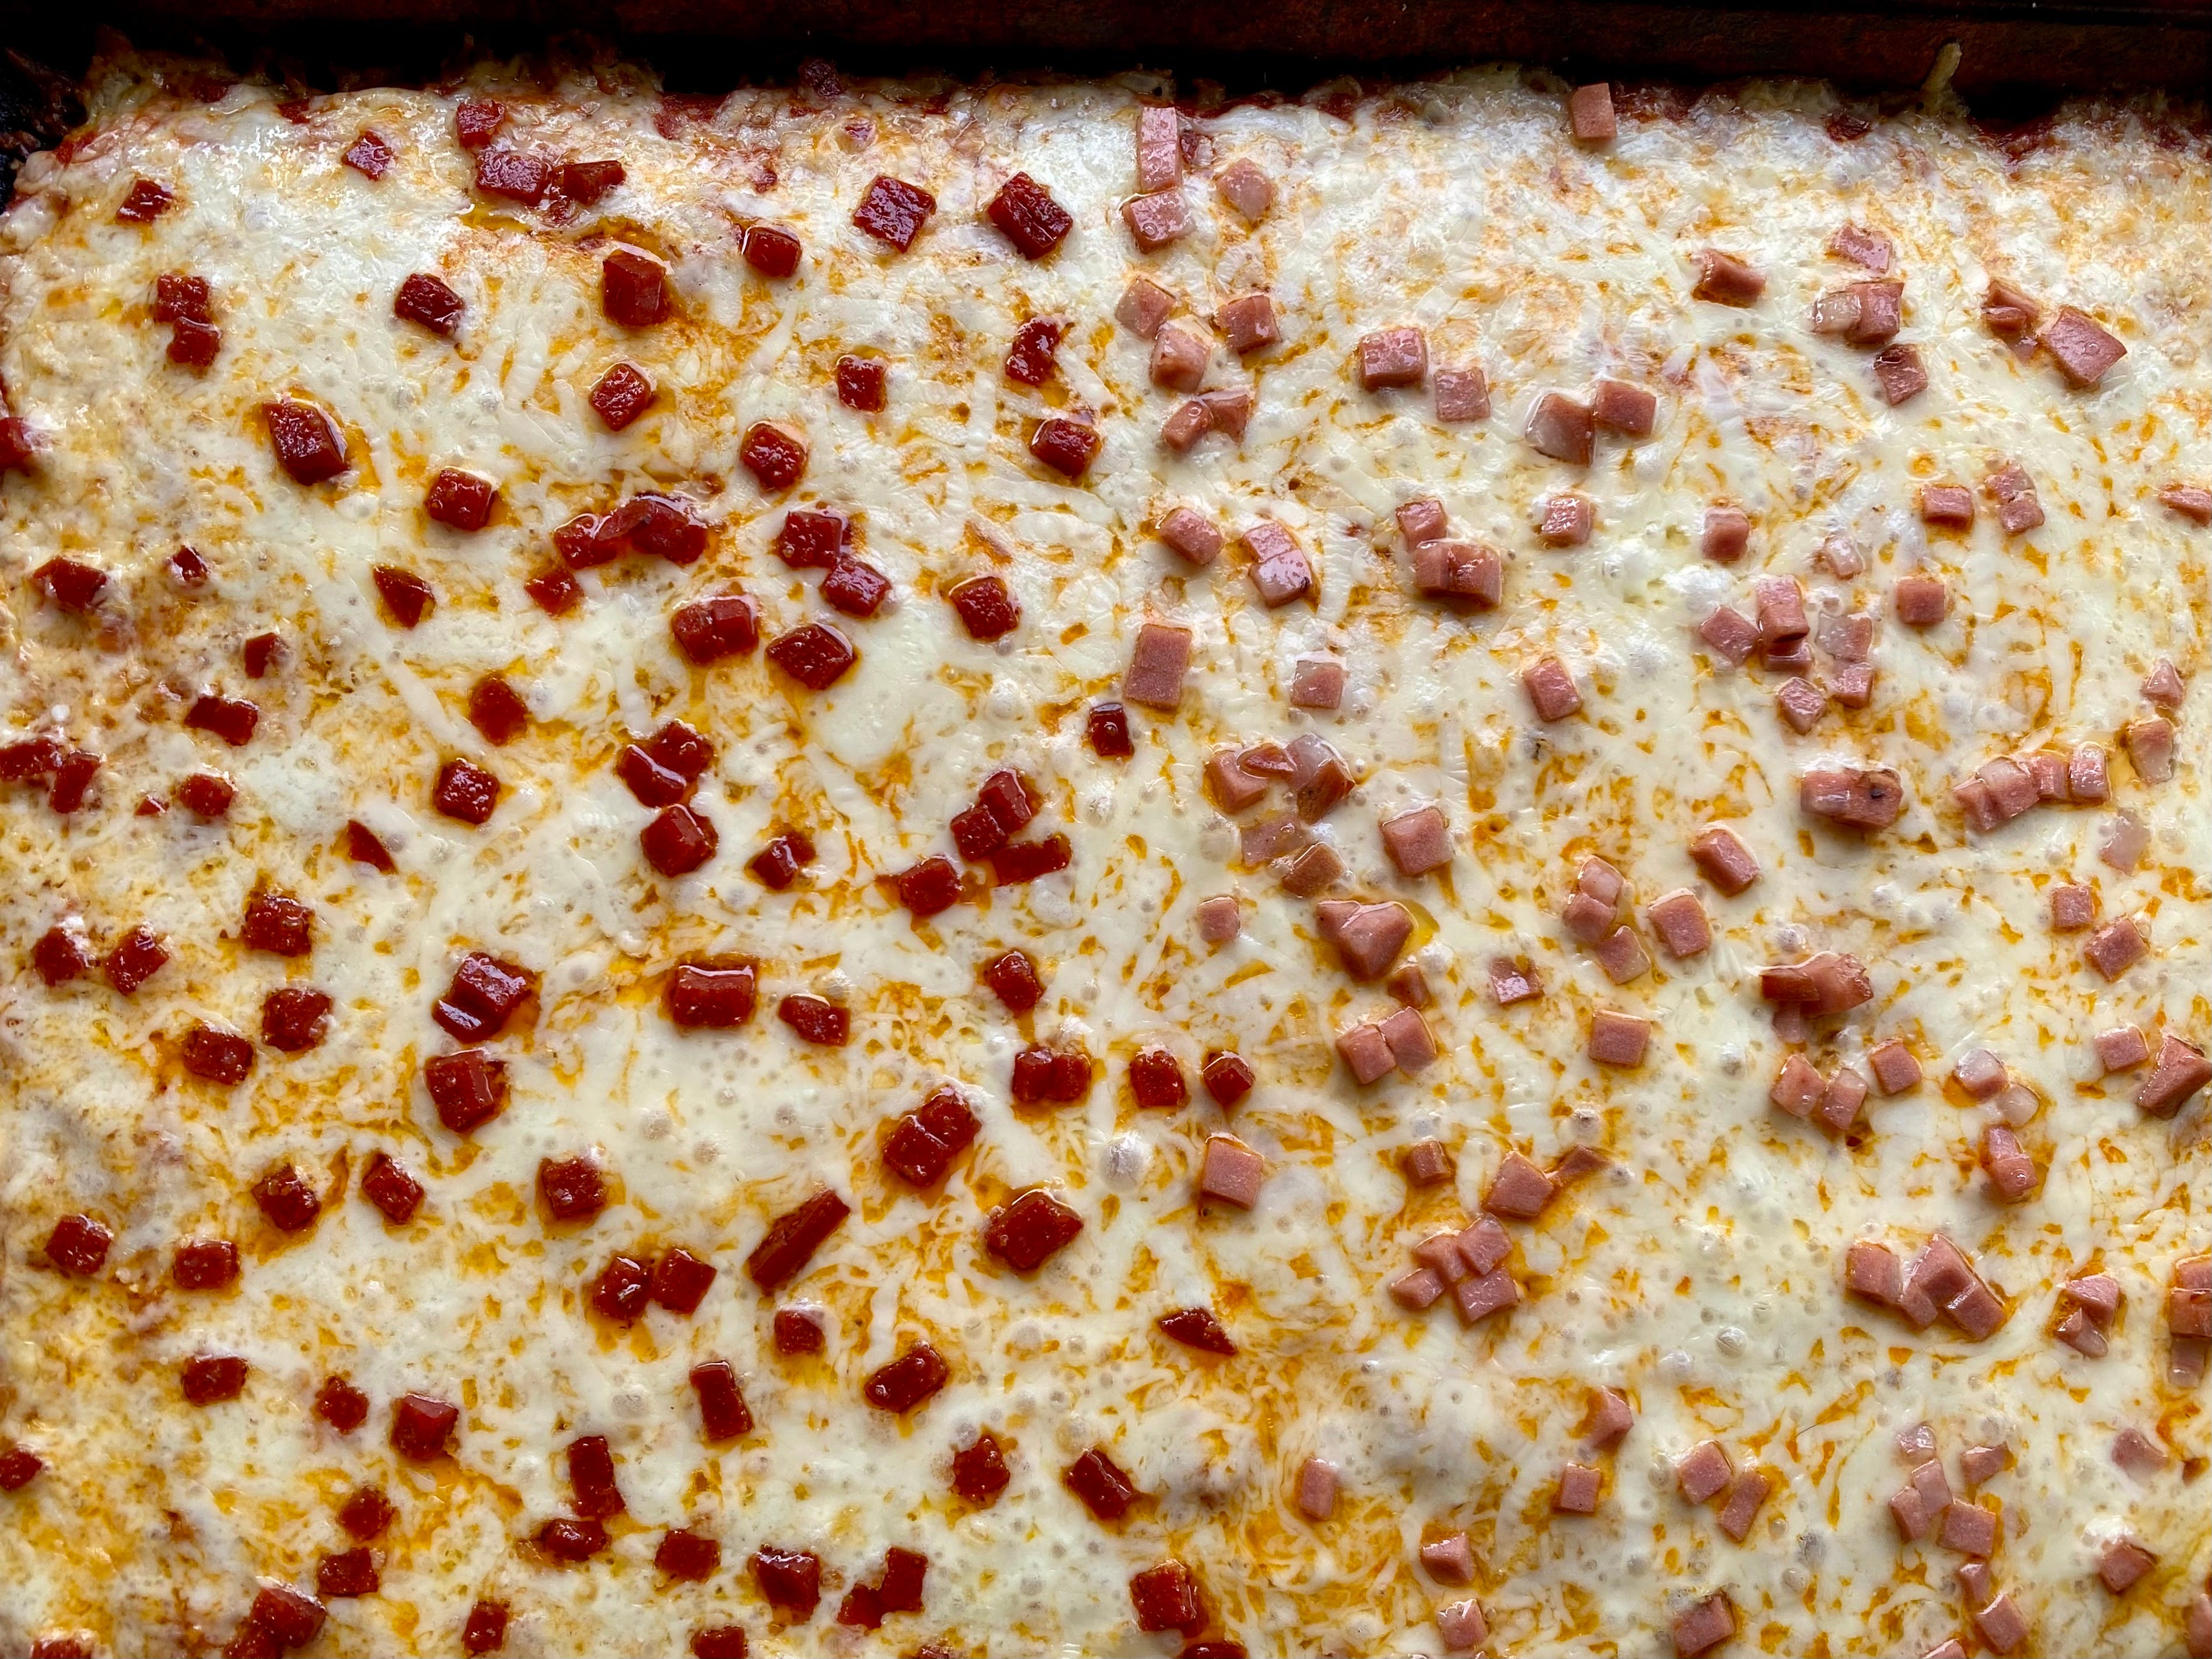 RECIPE: School Lunch Pizza Crust - by Liz Cook - Haterade